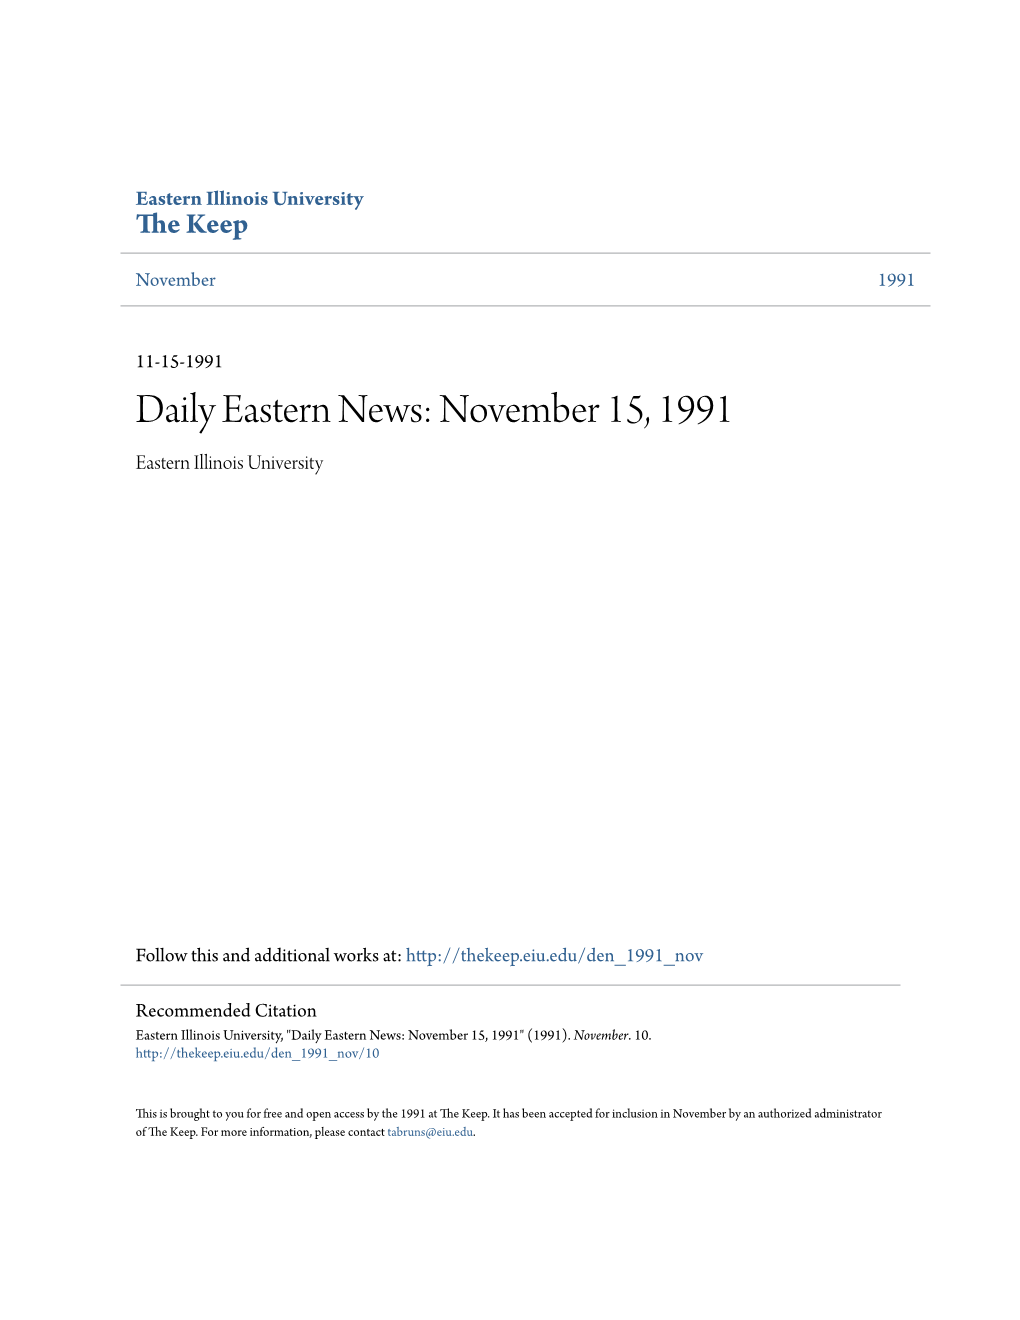 Daily Eastern News: November 15, 1991 Eastern Illinois University